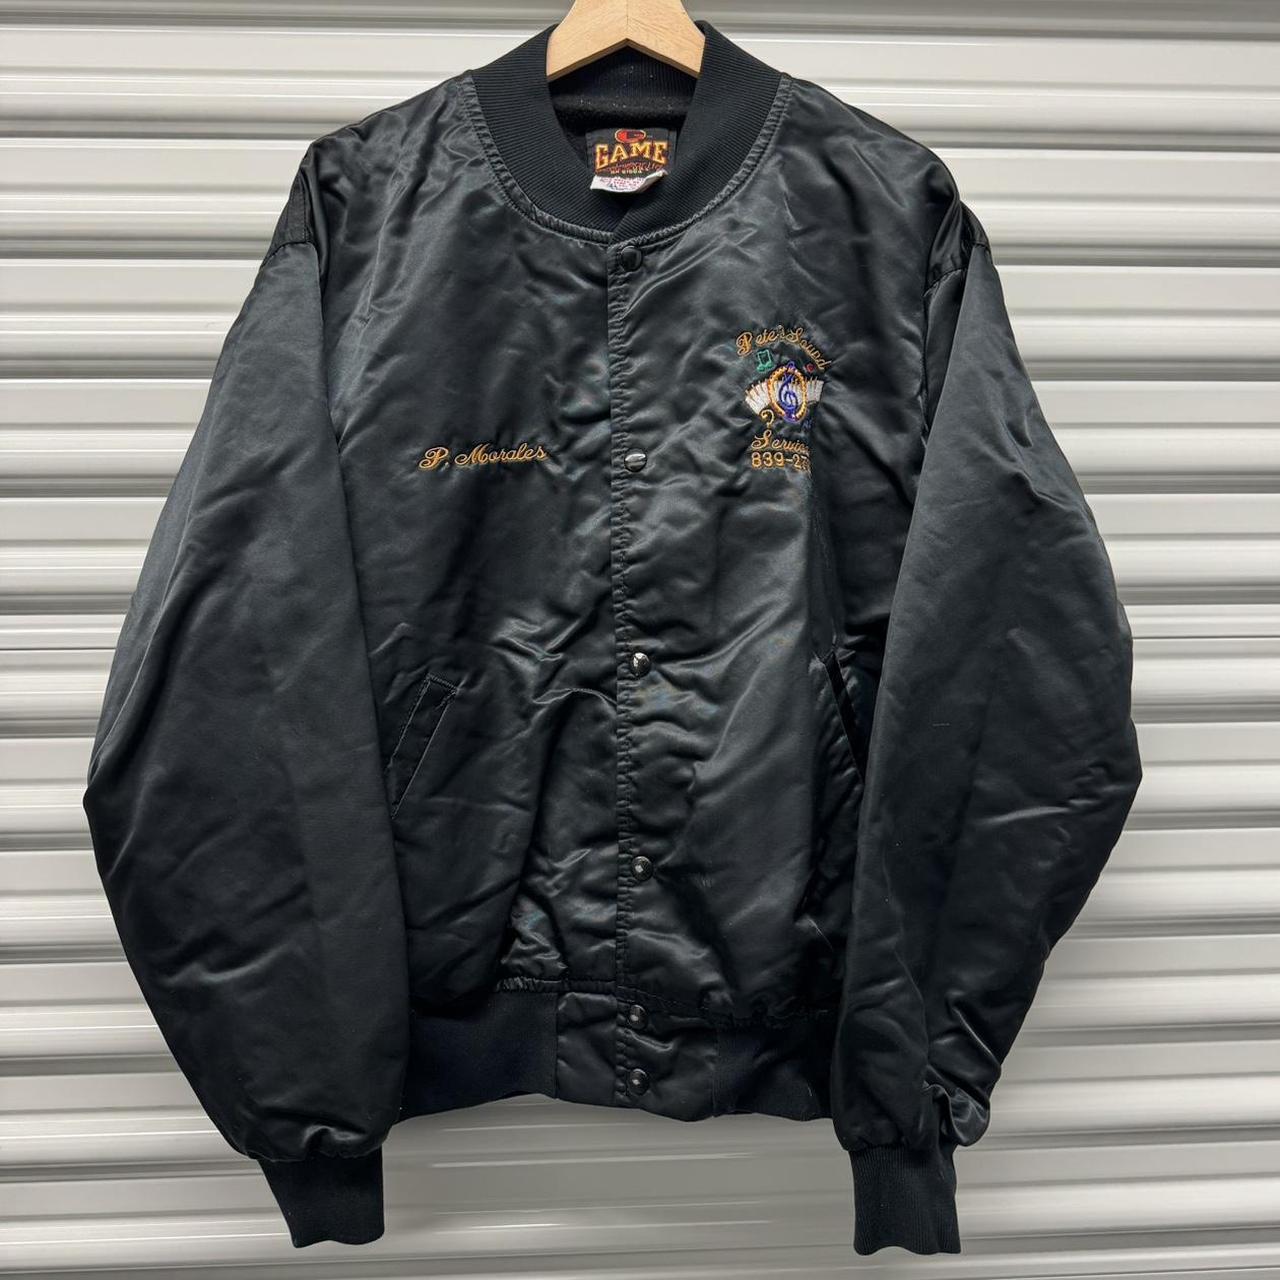 Vintage bomber jacket Great condition, no... - Depop